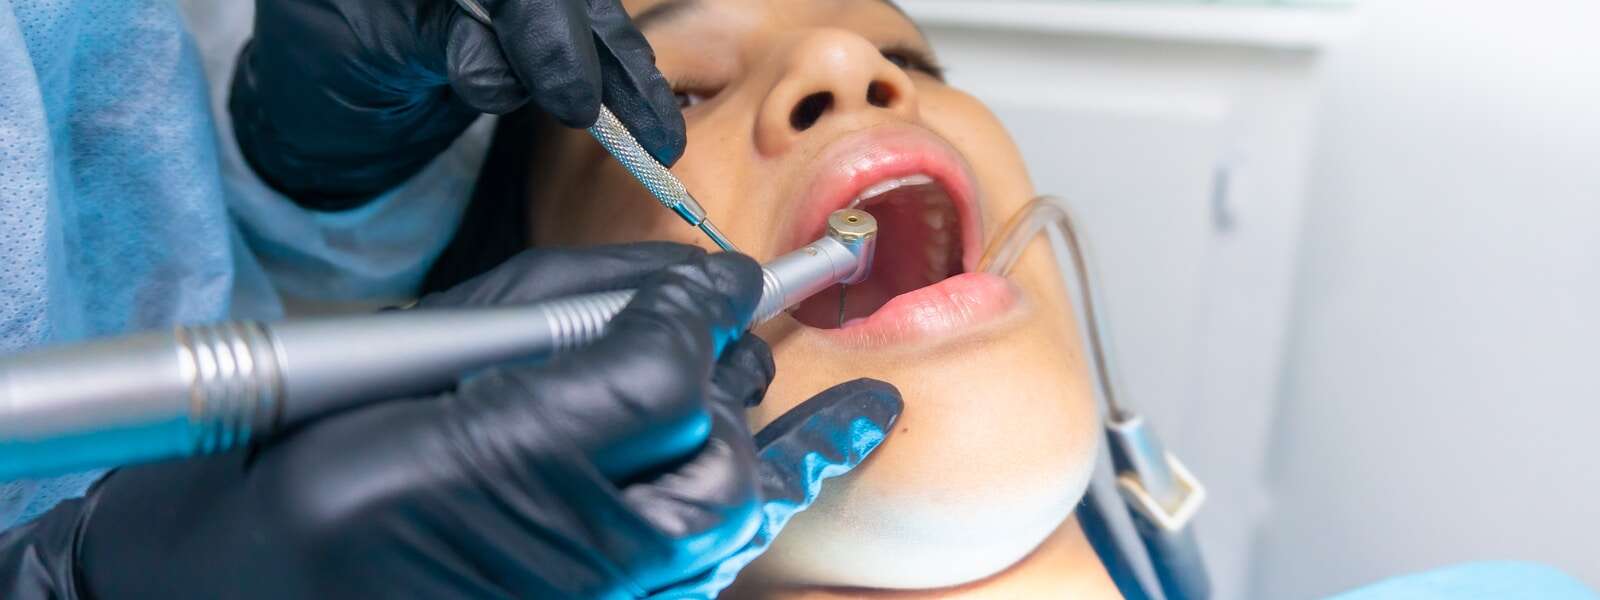 A patient gets dental treatment.